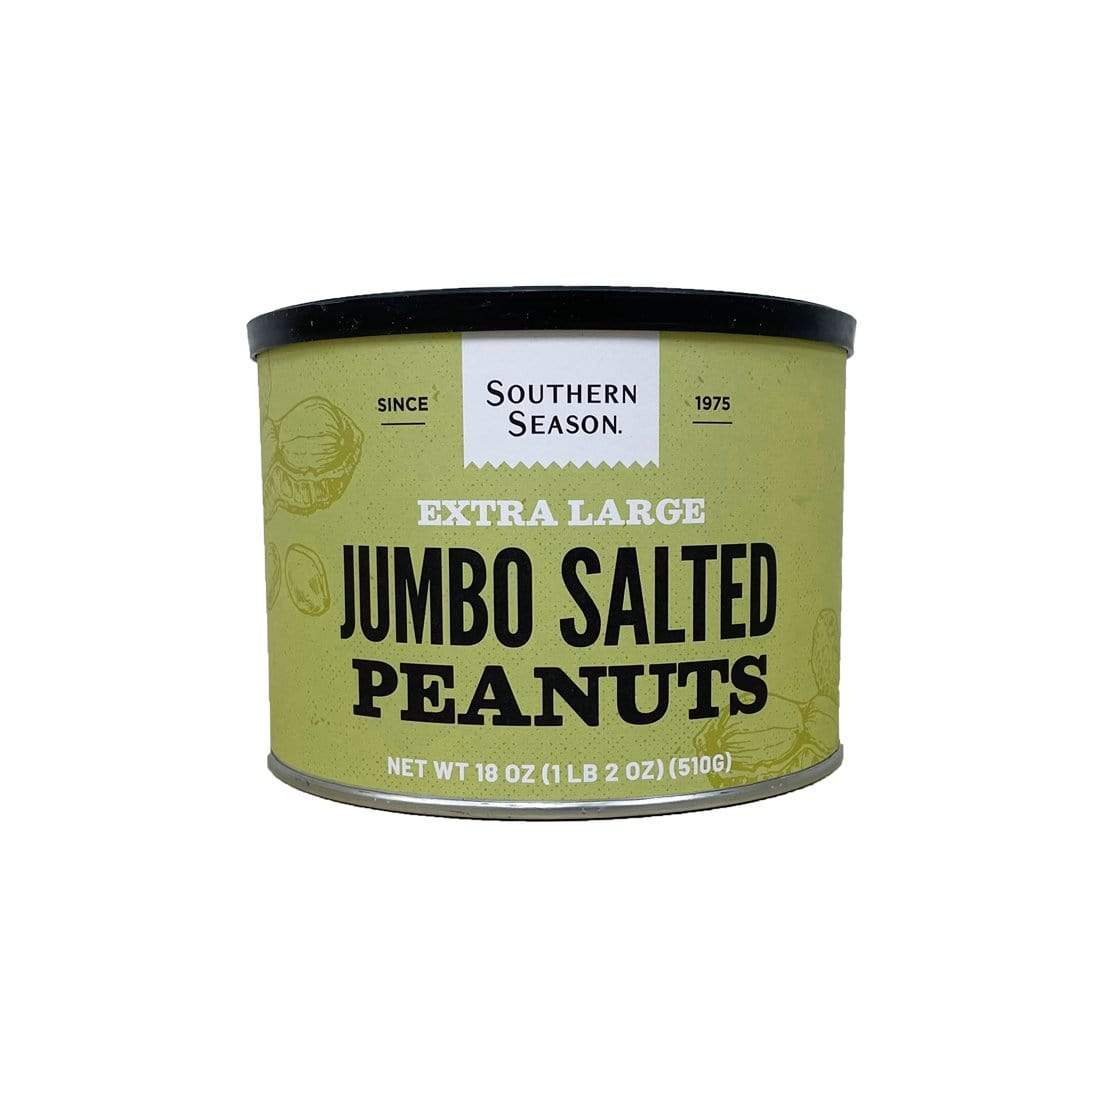 Southern Season Nuts Southern Season Jumbo Salted Peanuts 18 oz